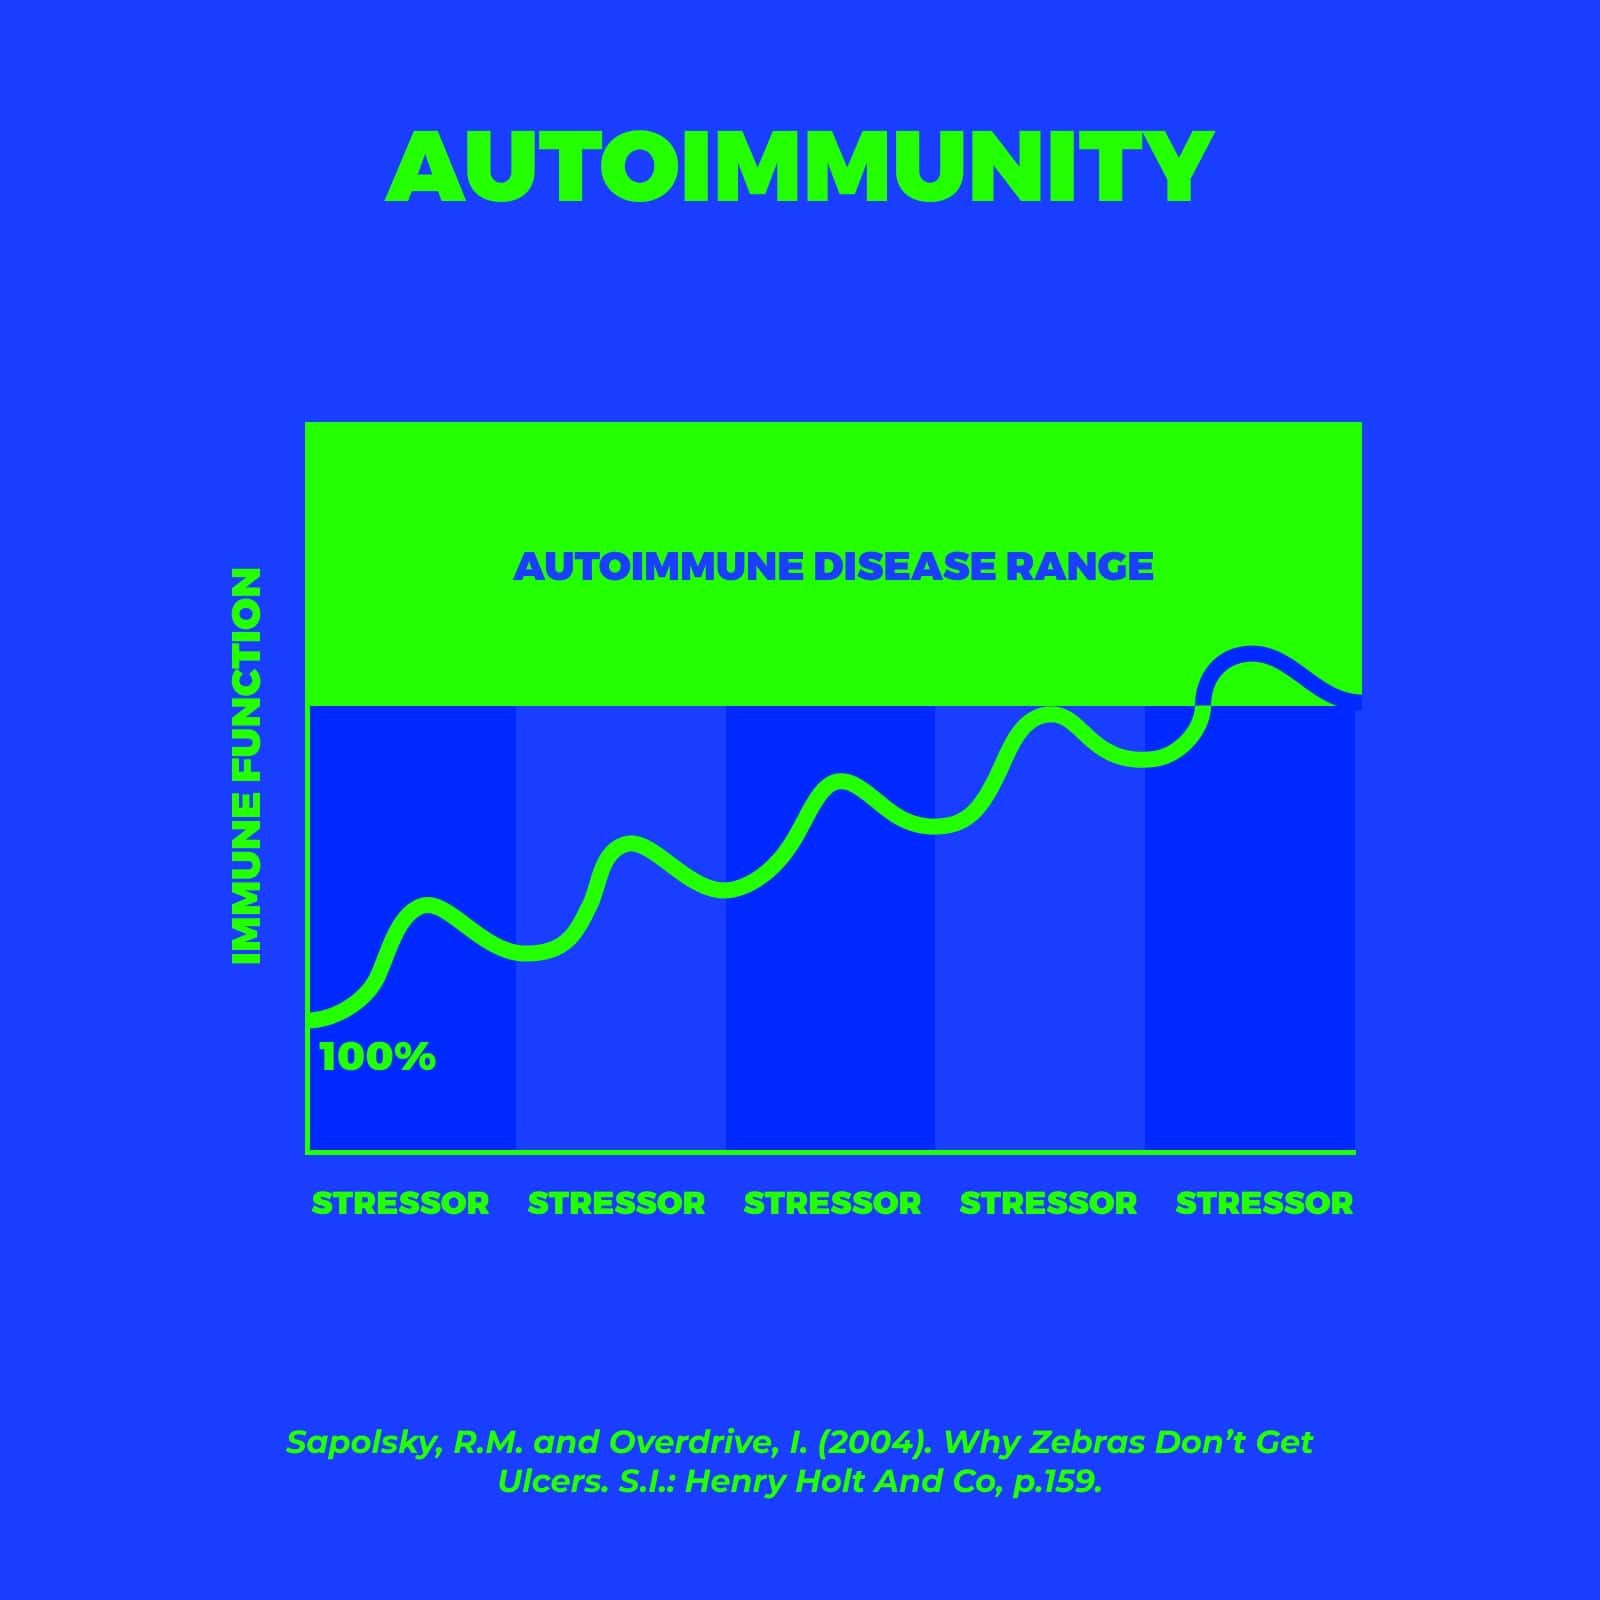 Chart of autoimmunity disease range with stressors